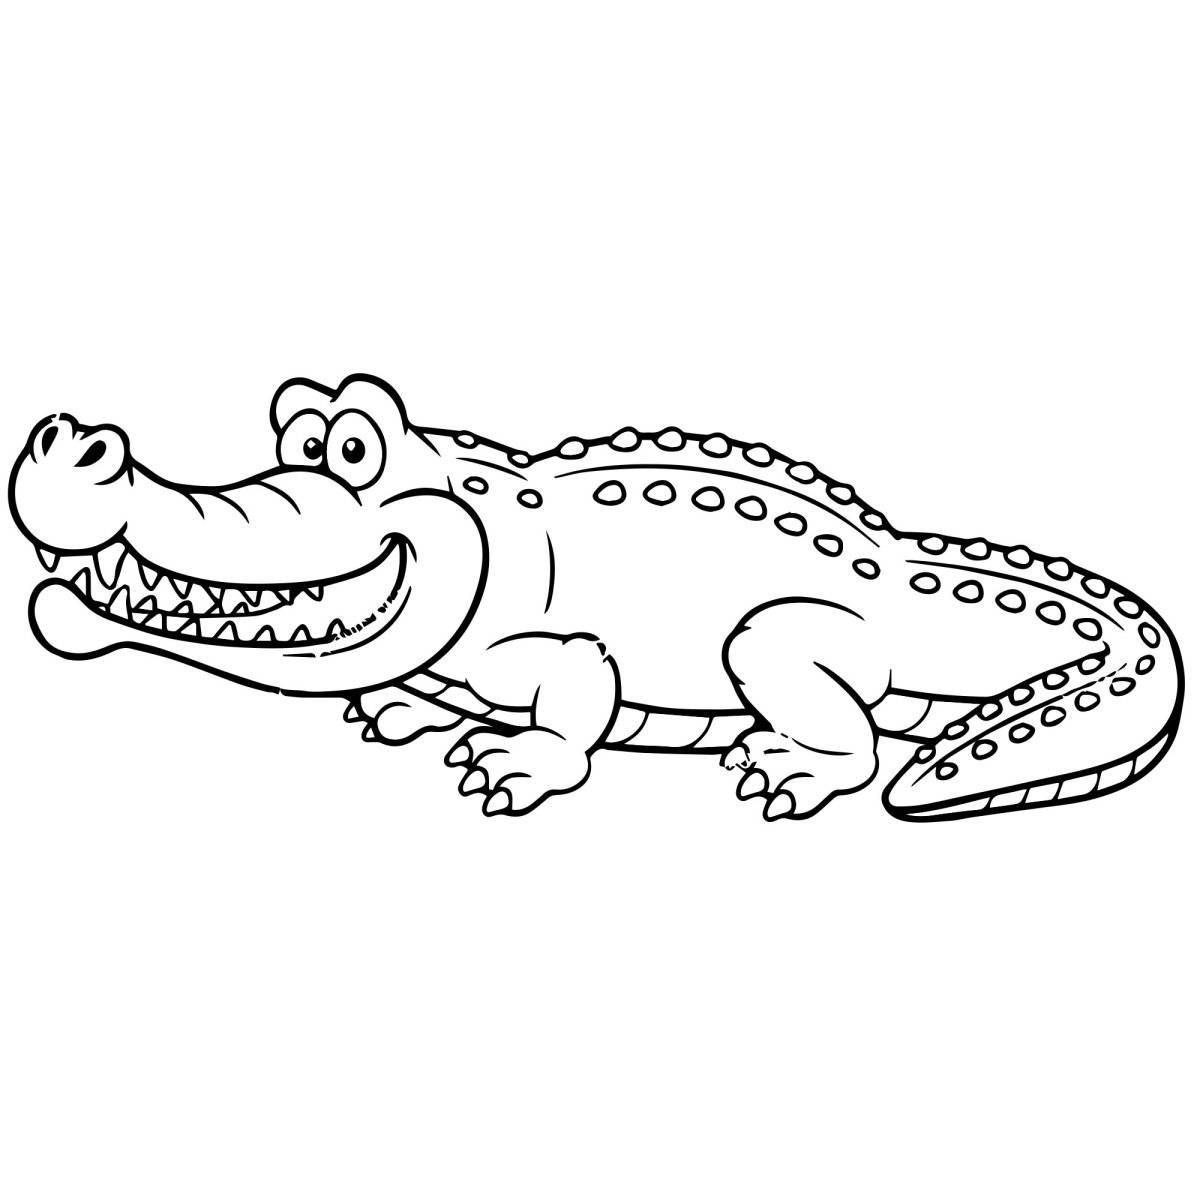 Joyful crocodile coloring book for kids